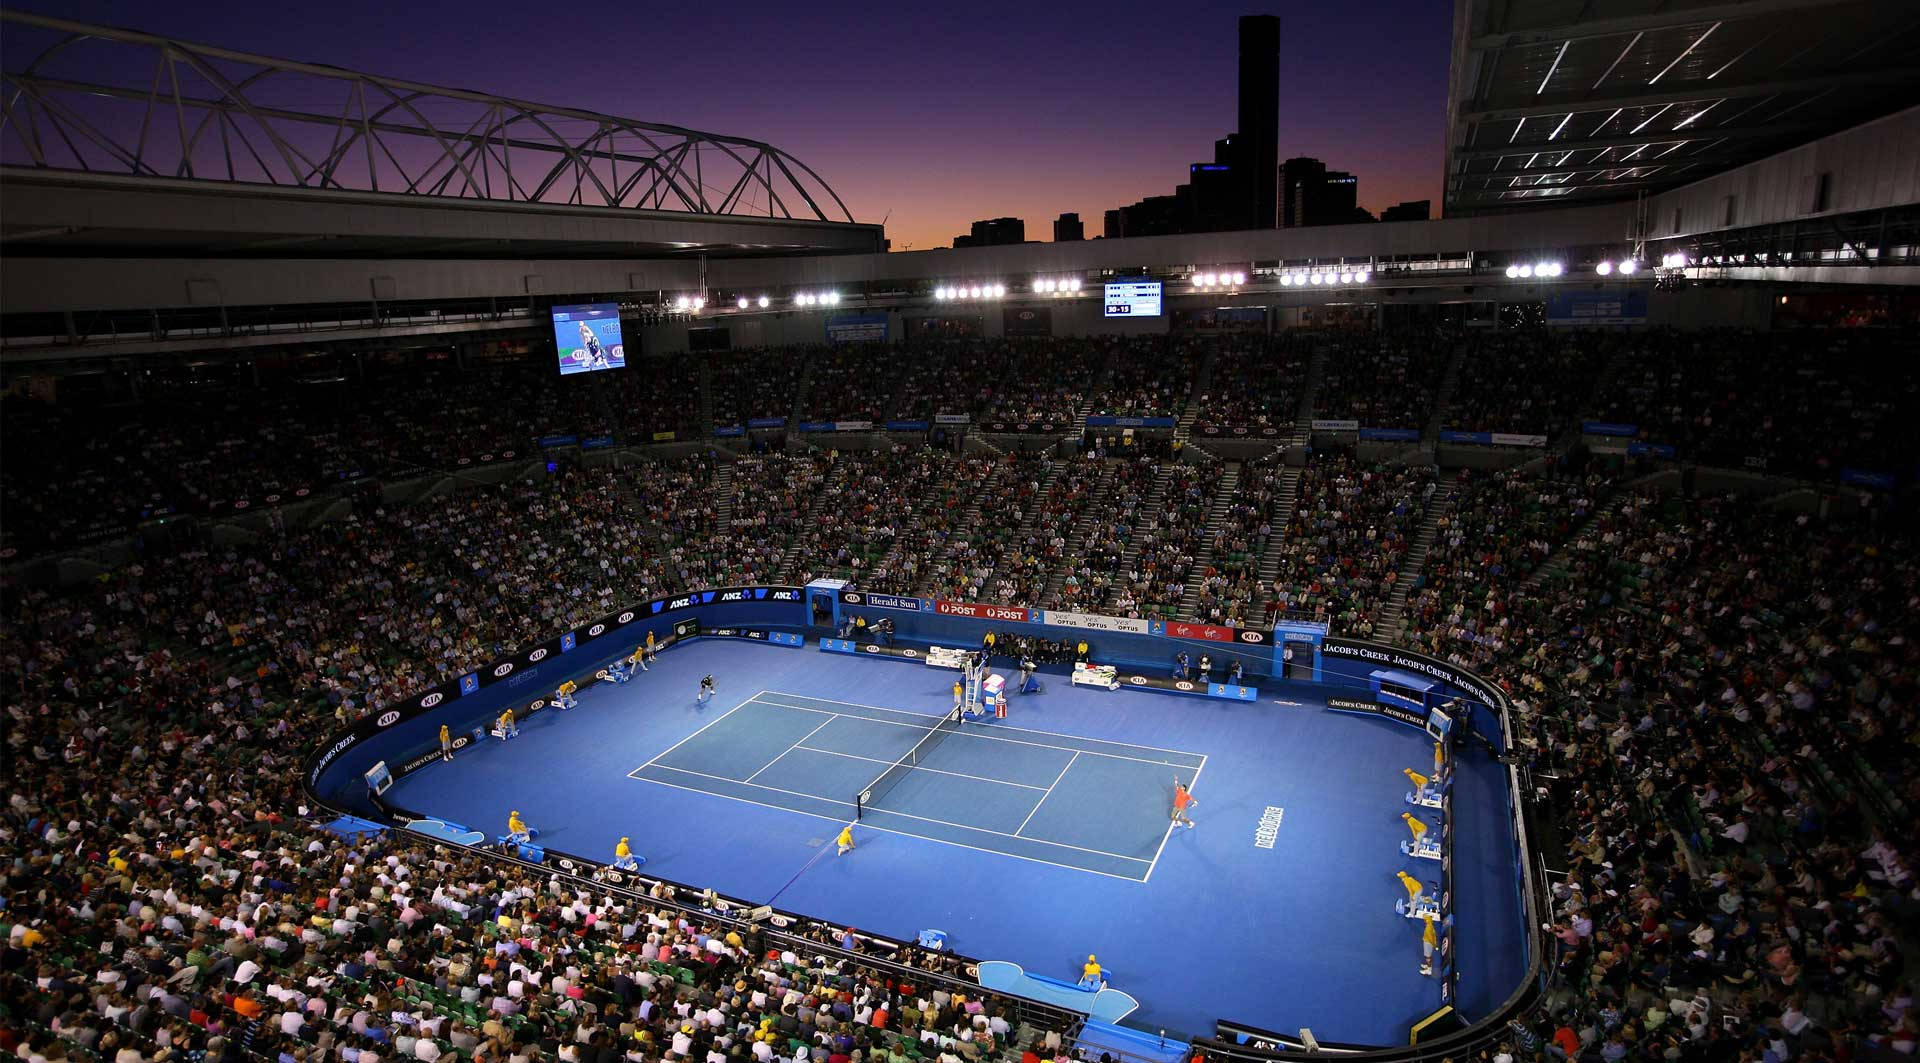 Australian Open Arena Aerial Photograph Background